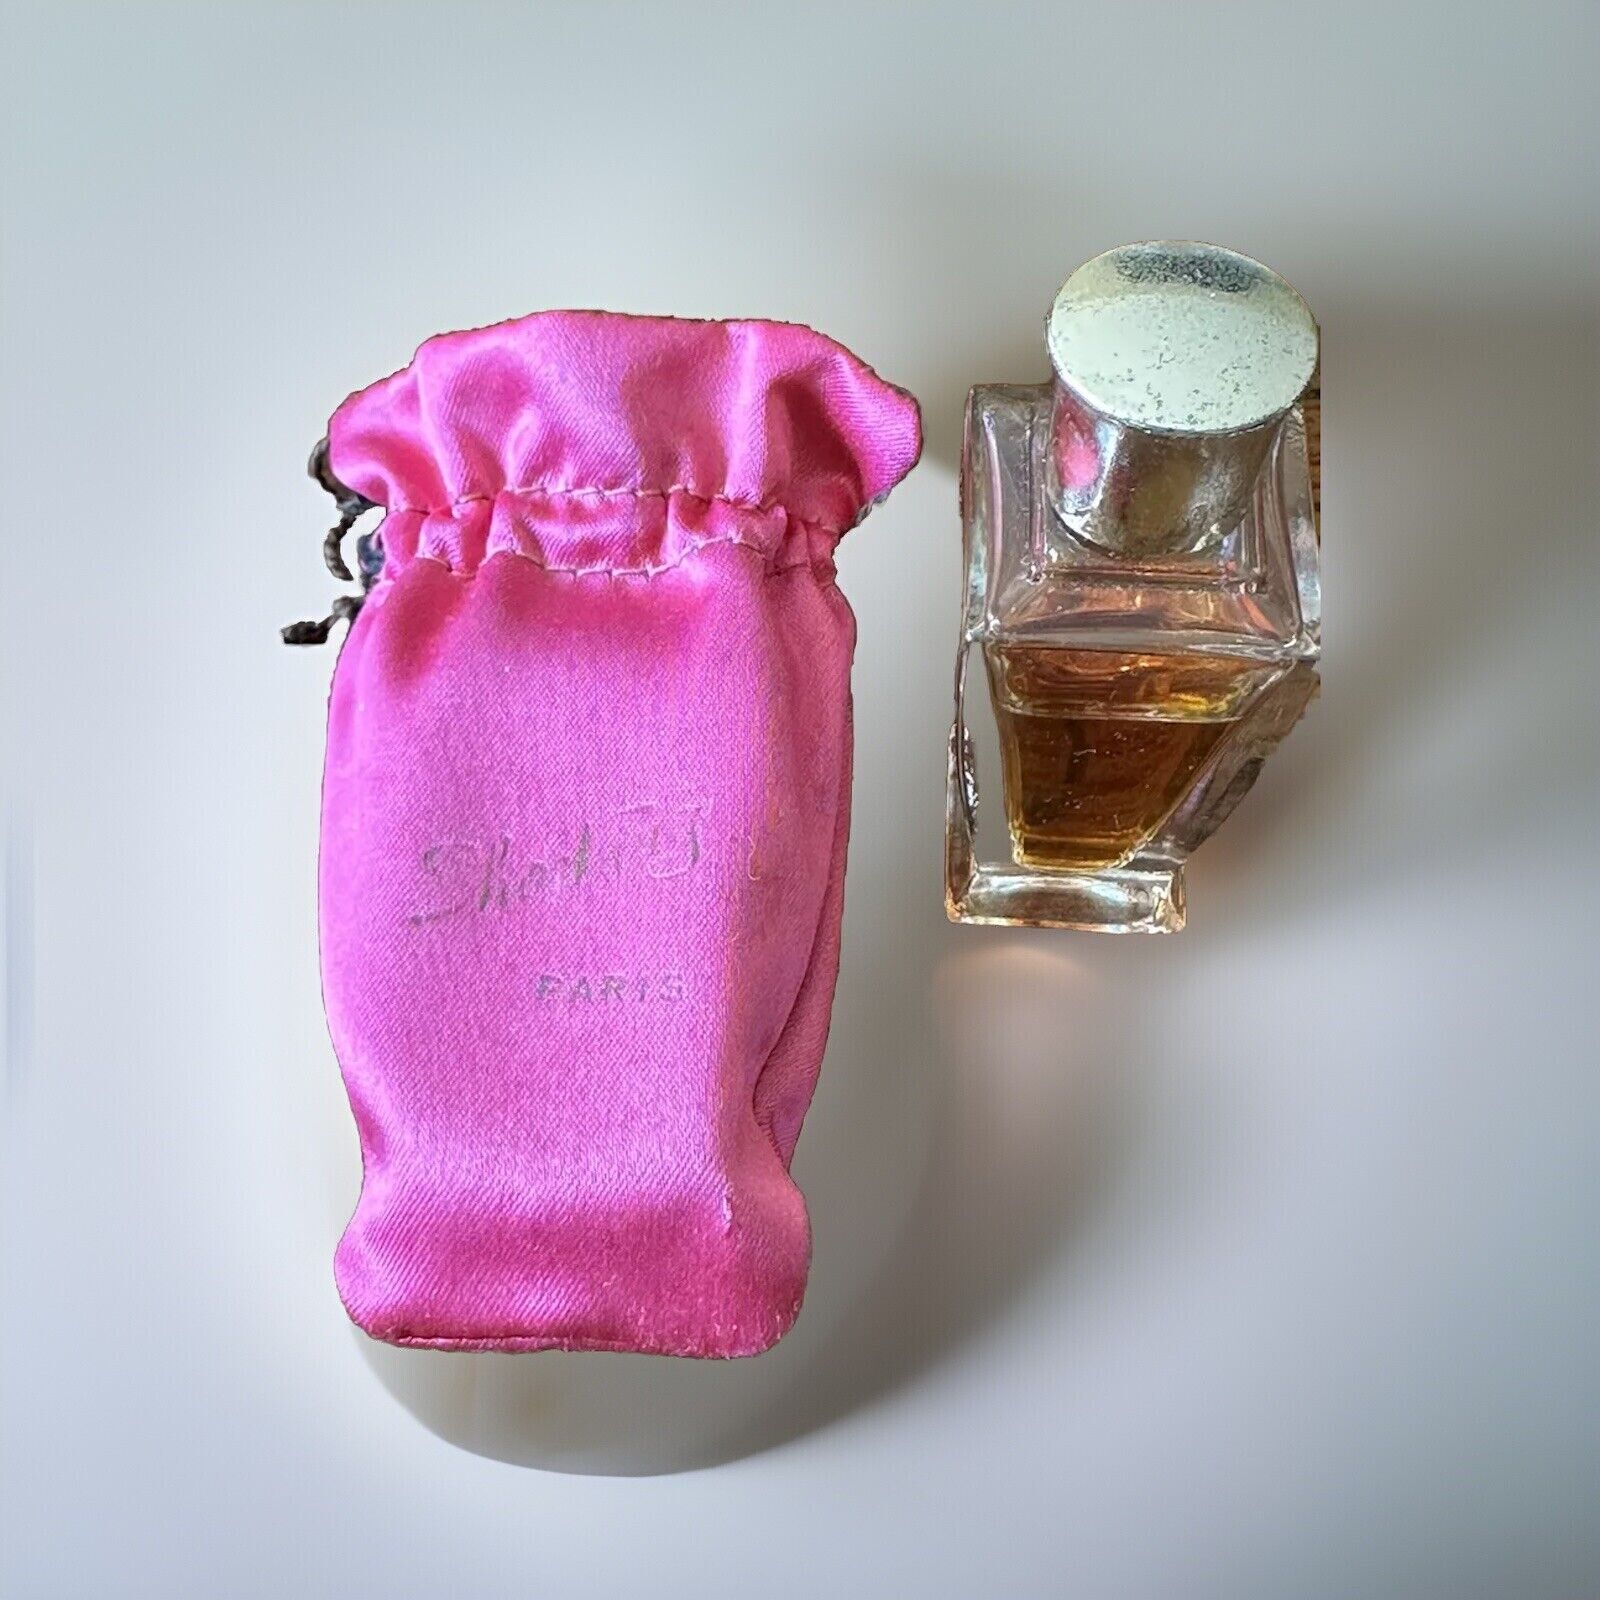 S Schiaparelli 10 mL shocking perfume with pink Satchel rare 1970